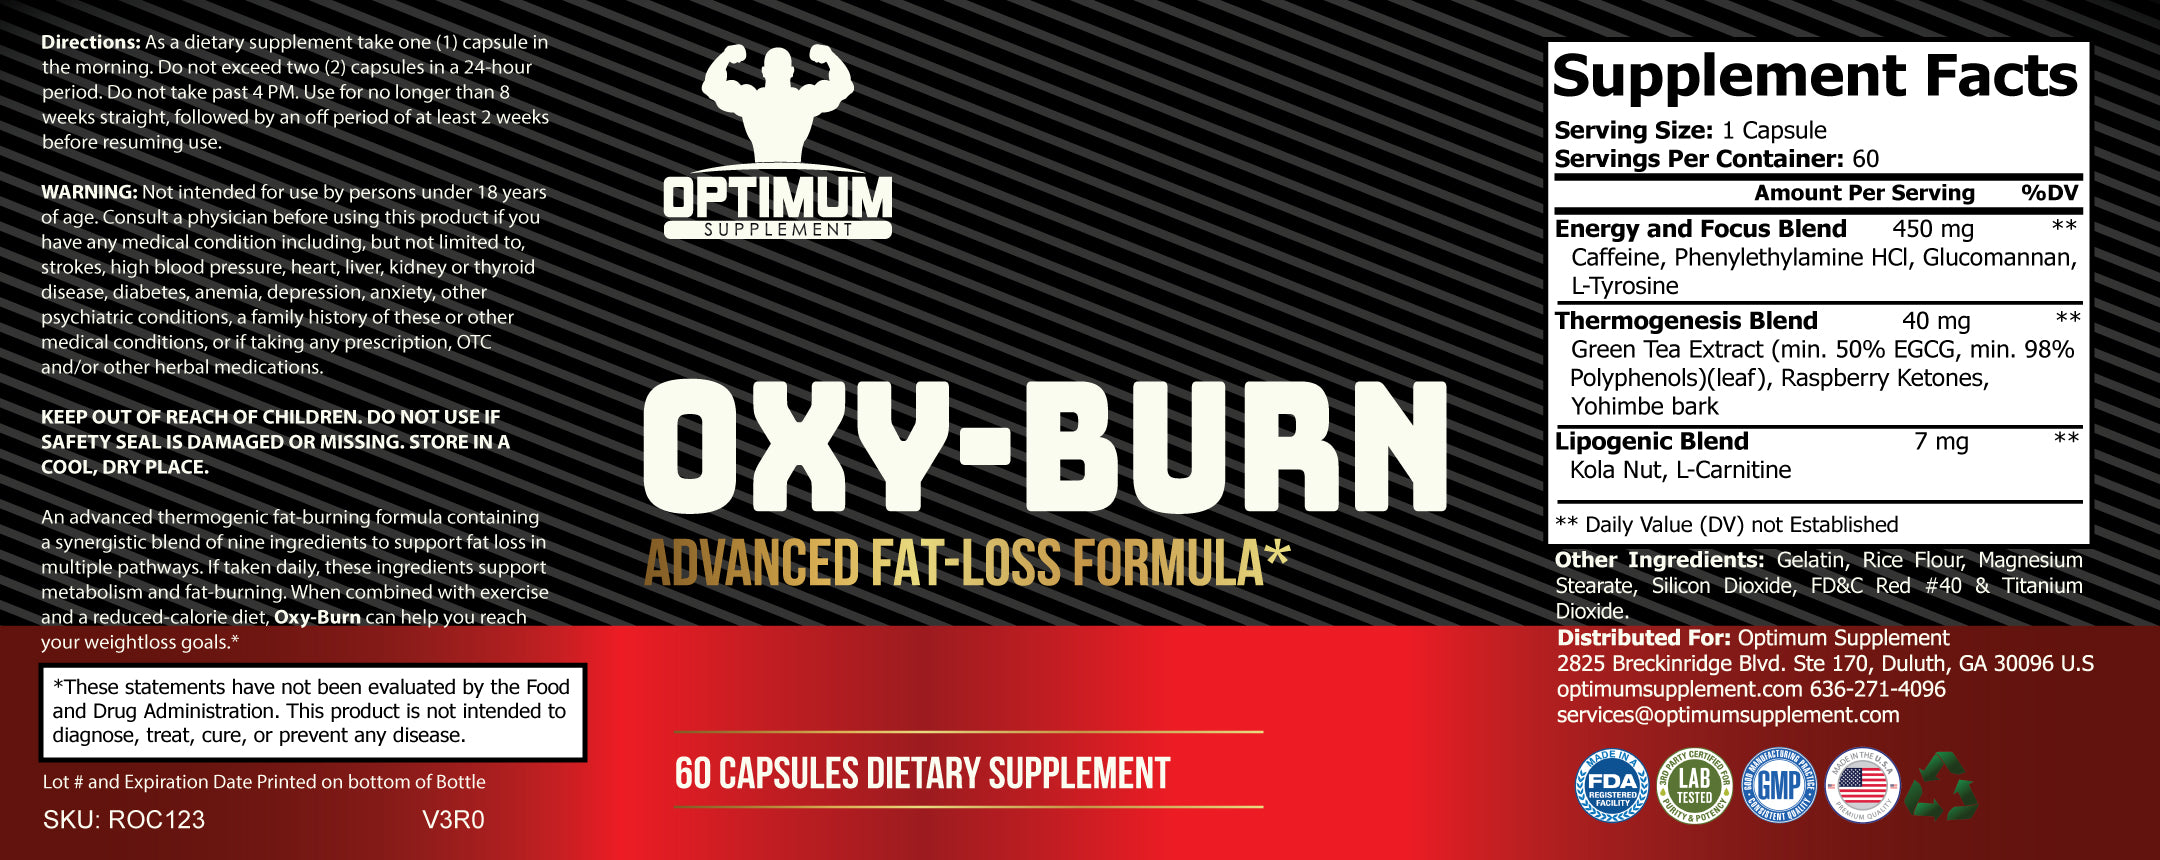 Oxy-Burn : Advanced Fat-Loss Formula